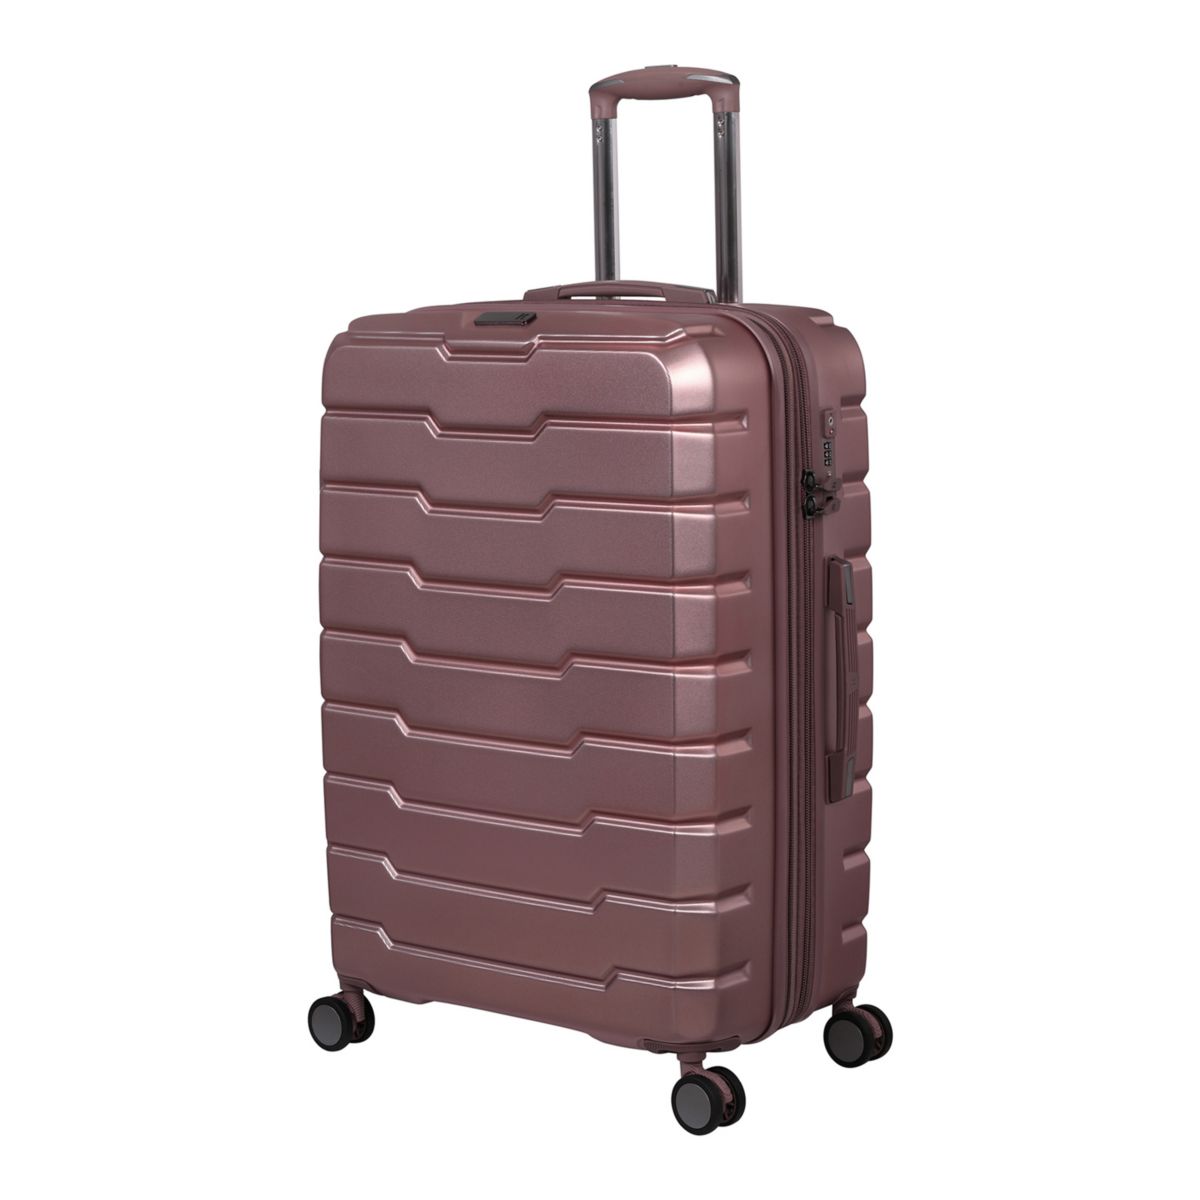 это багаж Prosperous Hardside Spinner Luggage It luggage